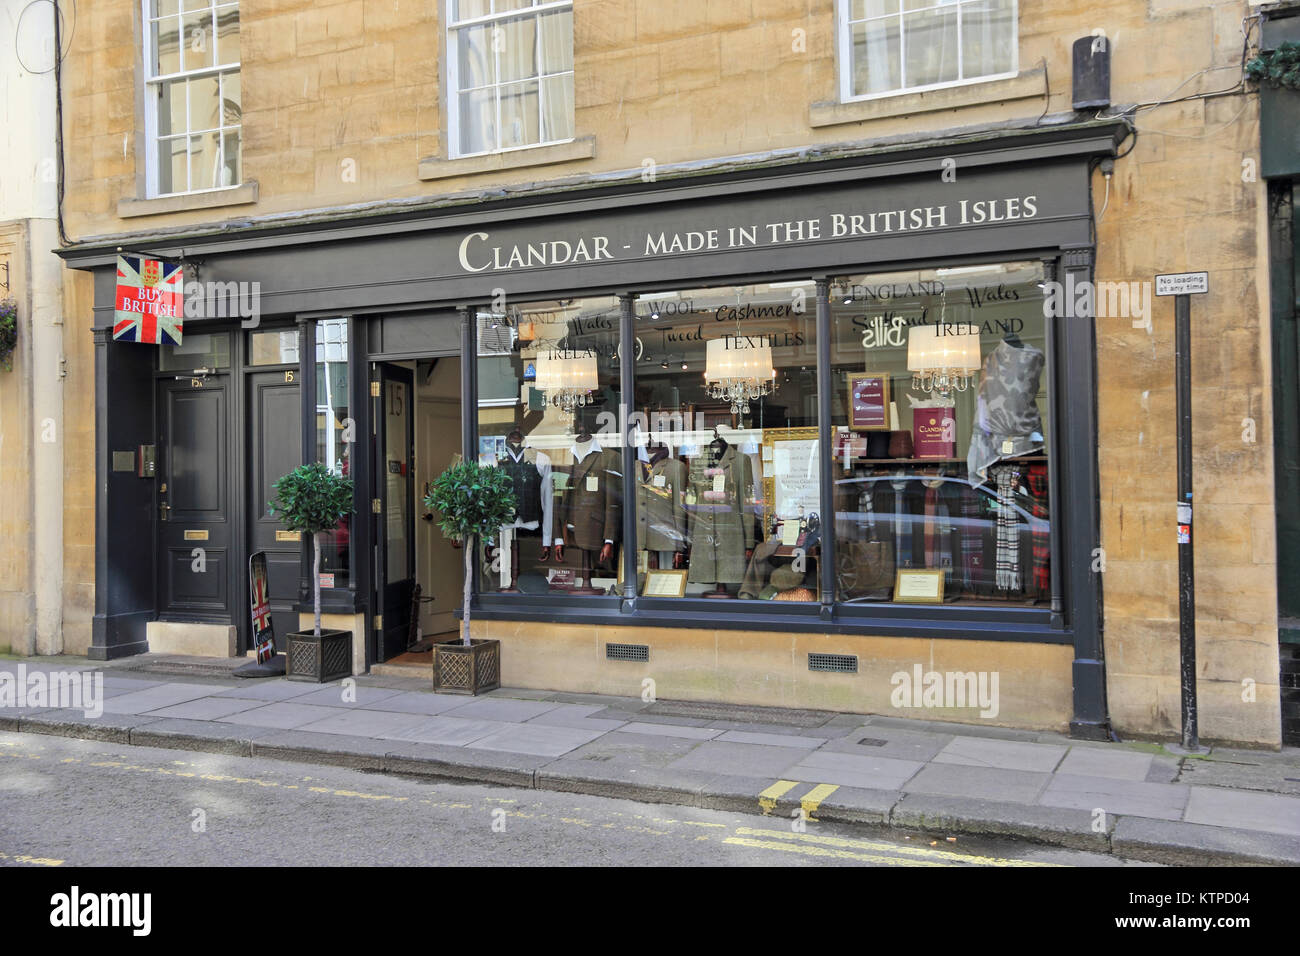 Clandar - Made in the British Isles shop, Bath Stock Photo